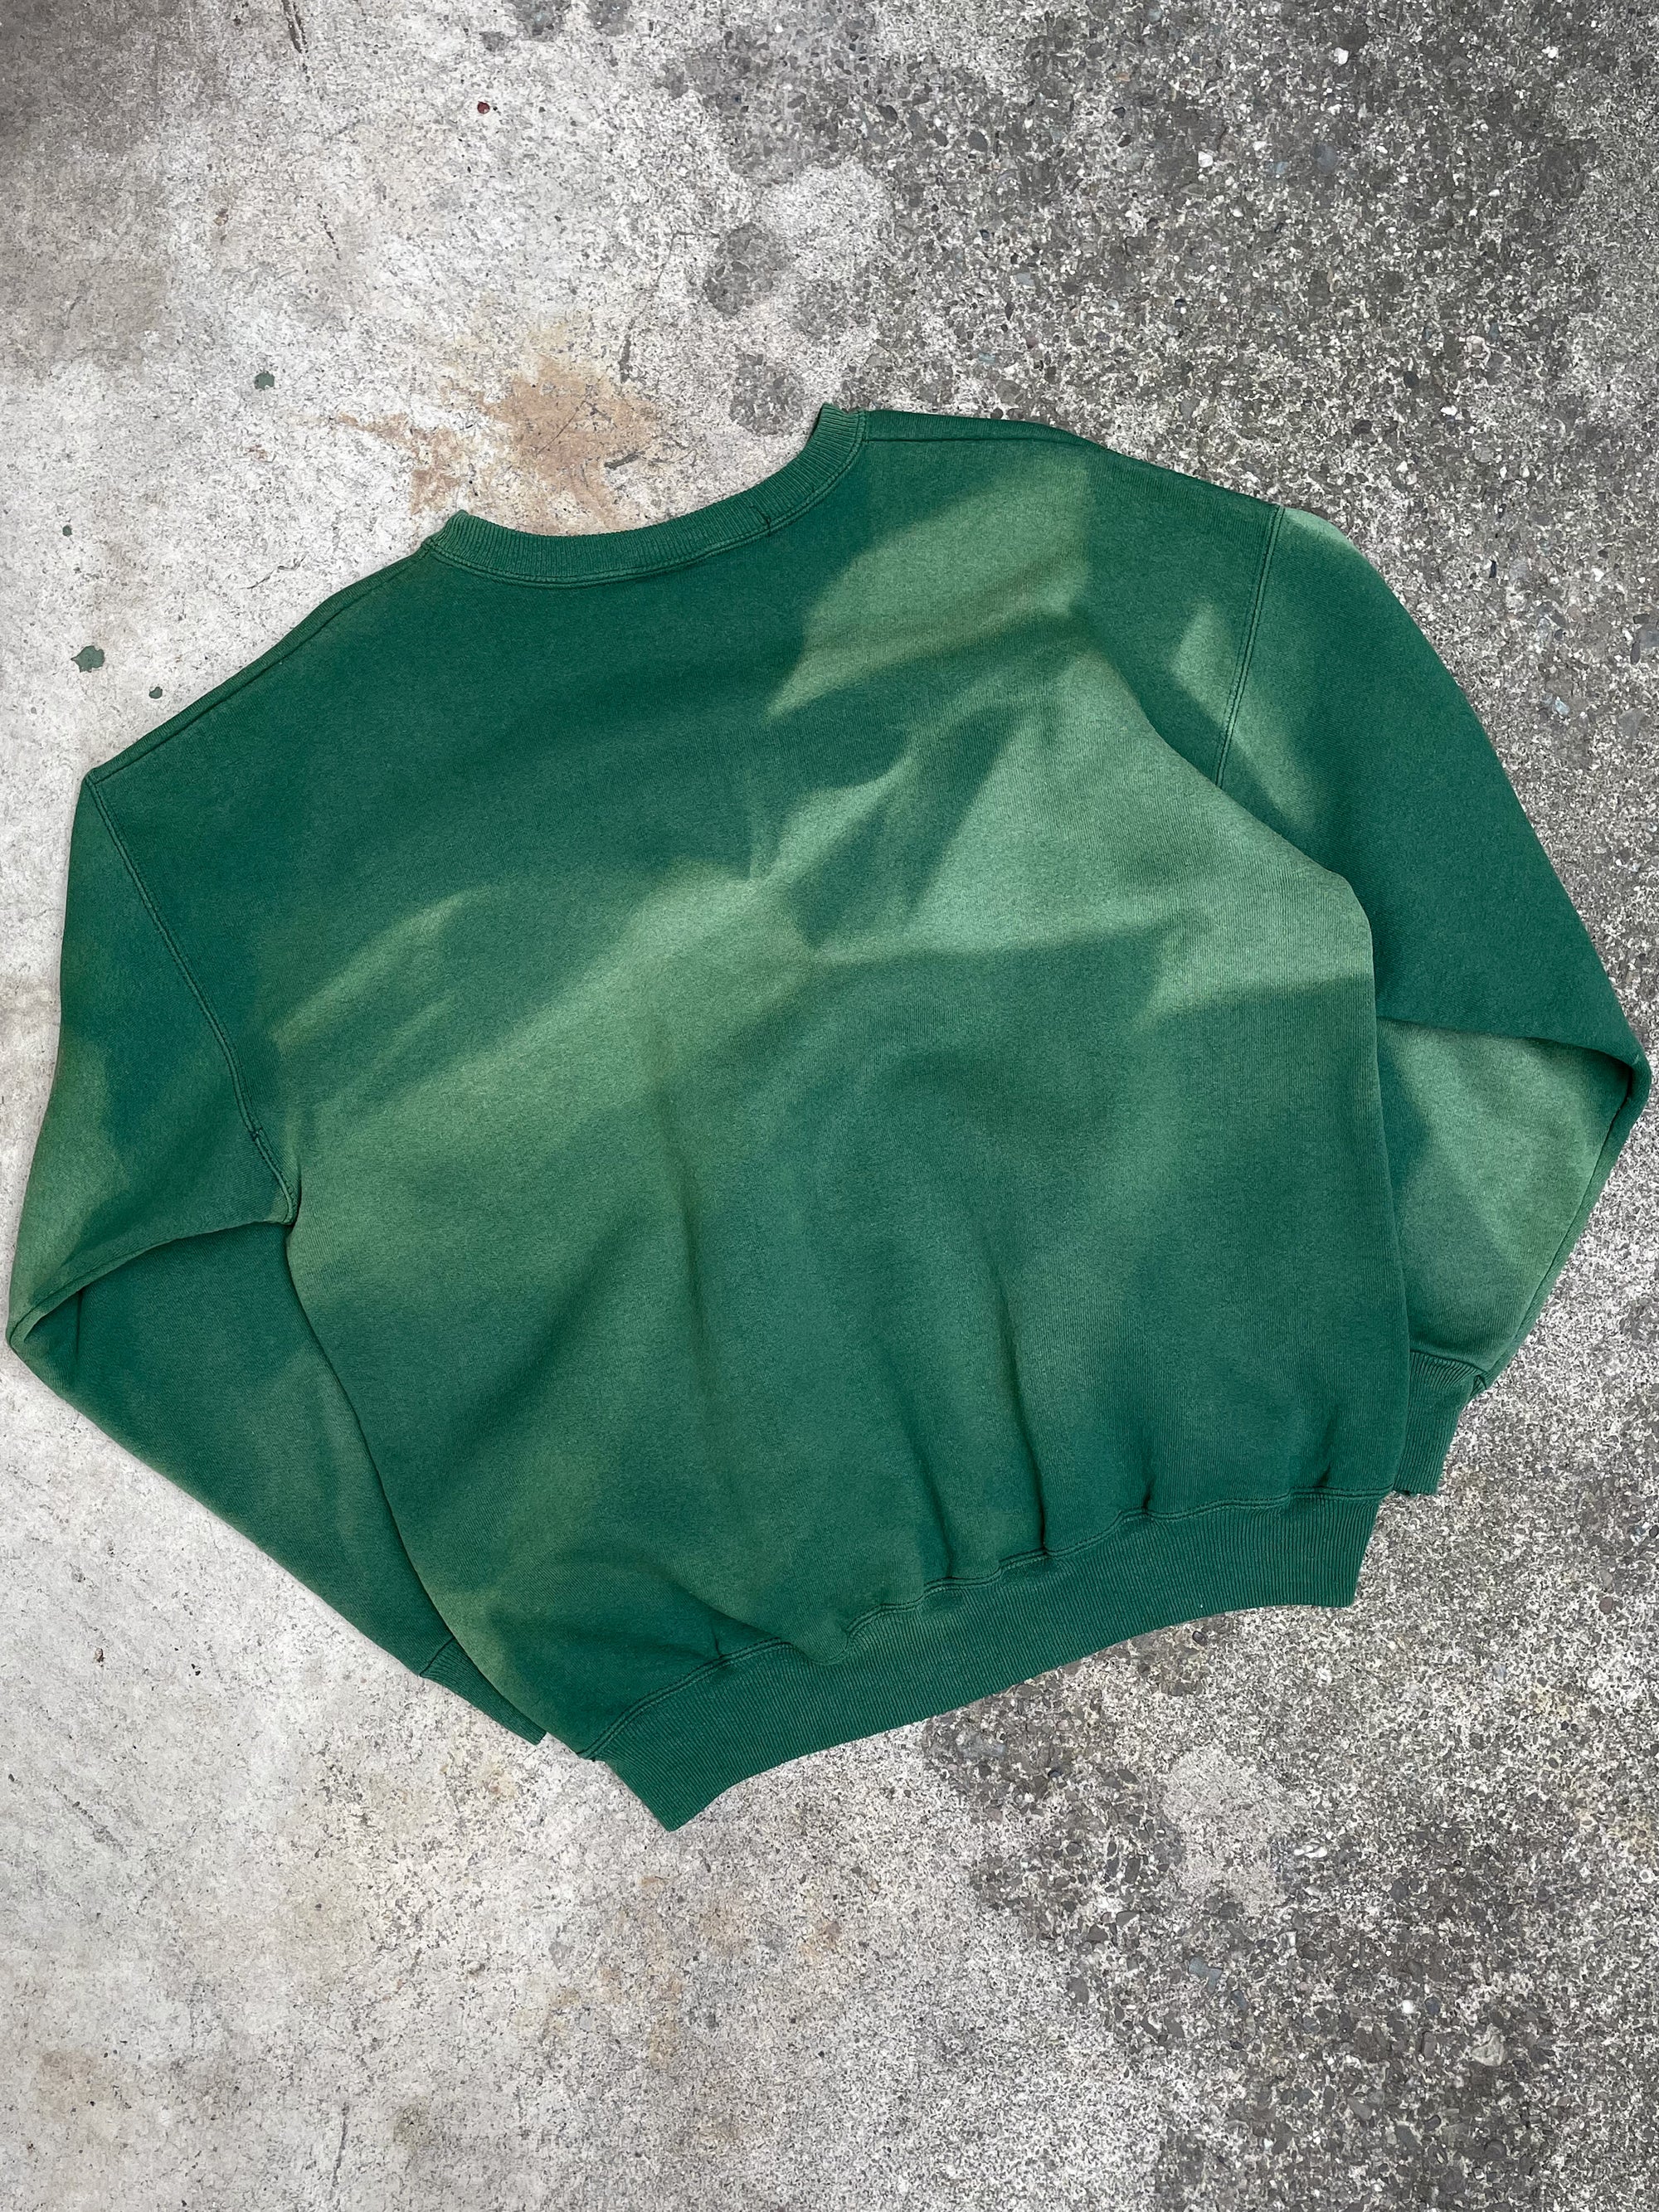 1990s Sun Faded Green Blank Sweatshirt (L/XL)